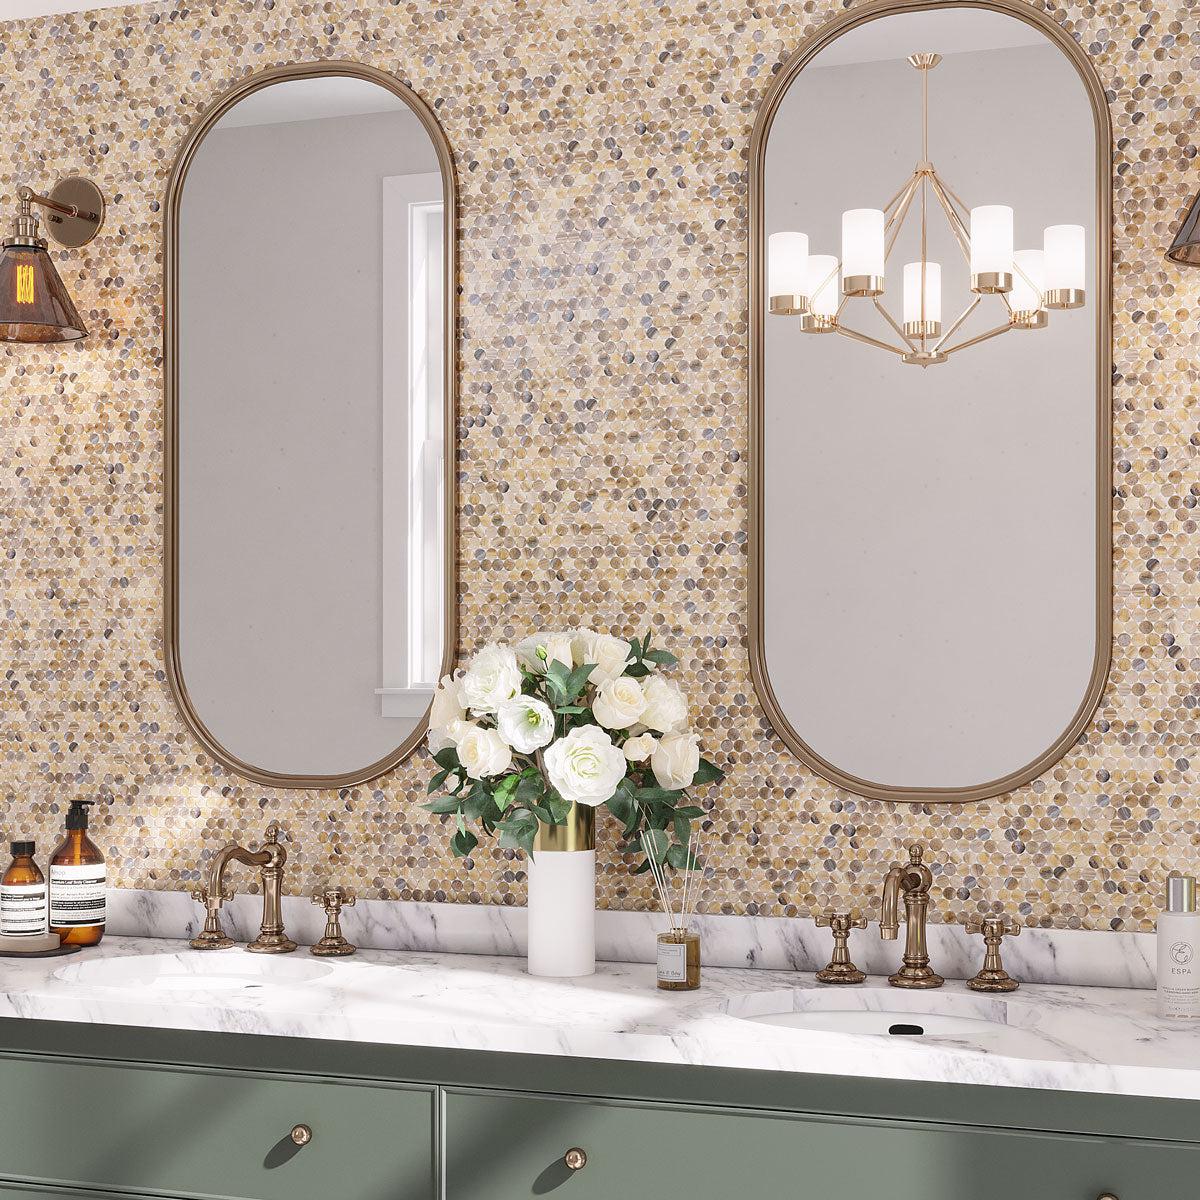 Agate Glass Penny Round Mosaic Tile bathroom backsplash